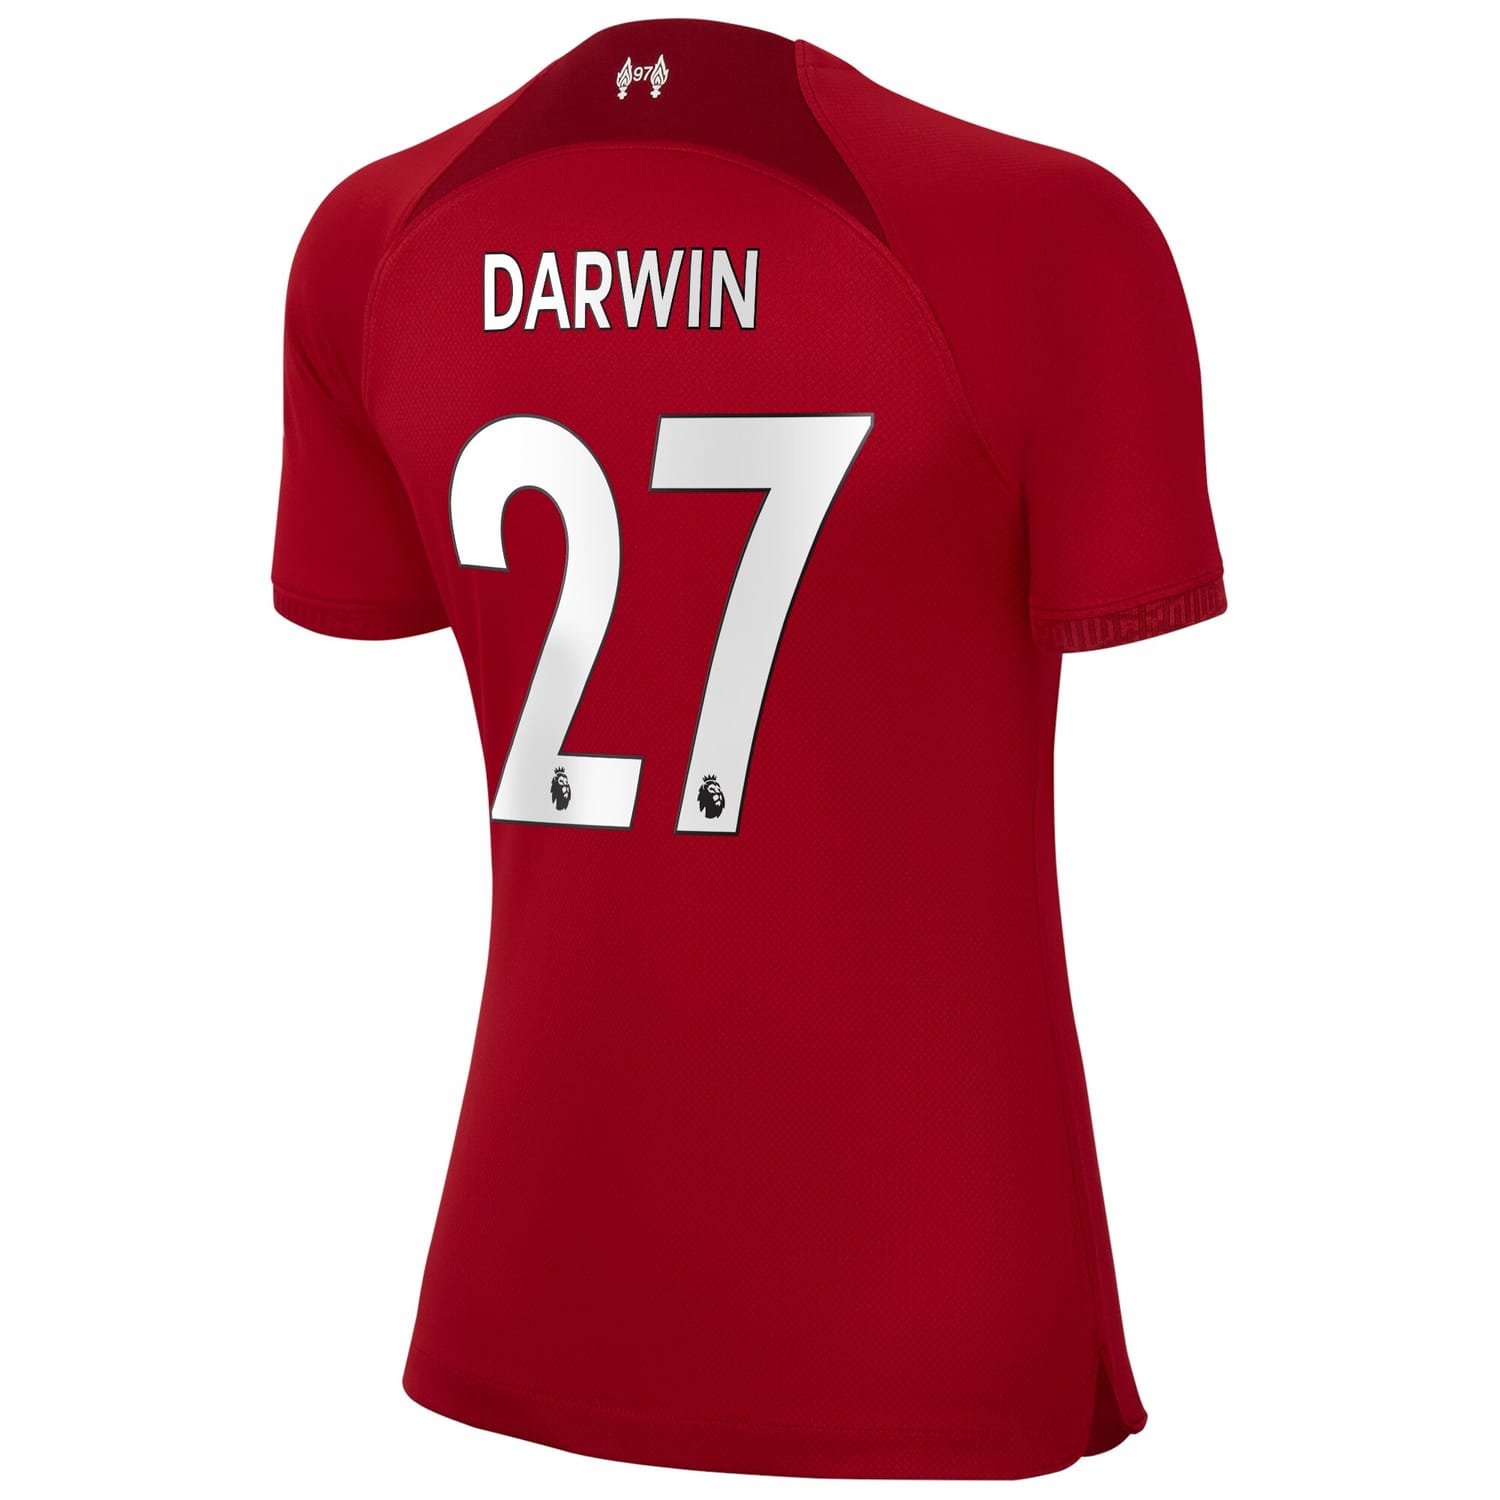 Premier League Liverpool Home Jersey Shirt 2022-23 player Darwin Núñez 27 printing for Women